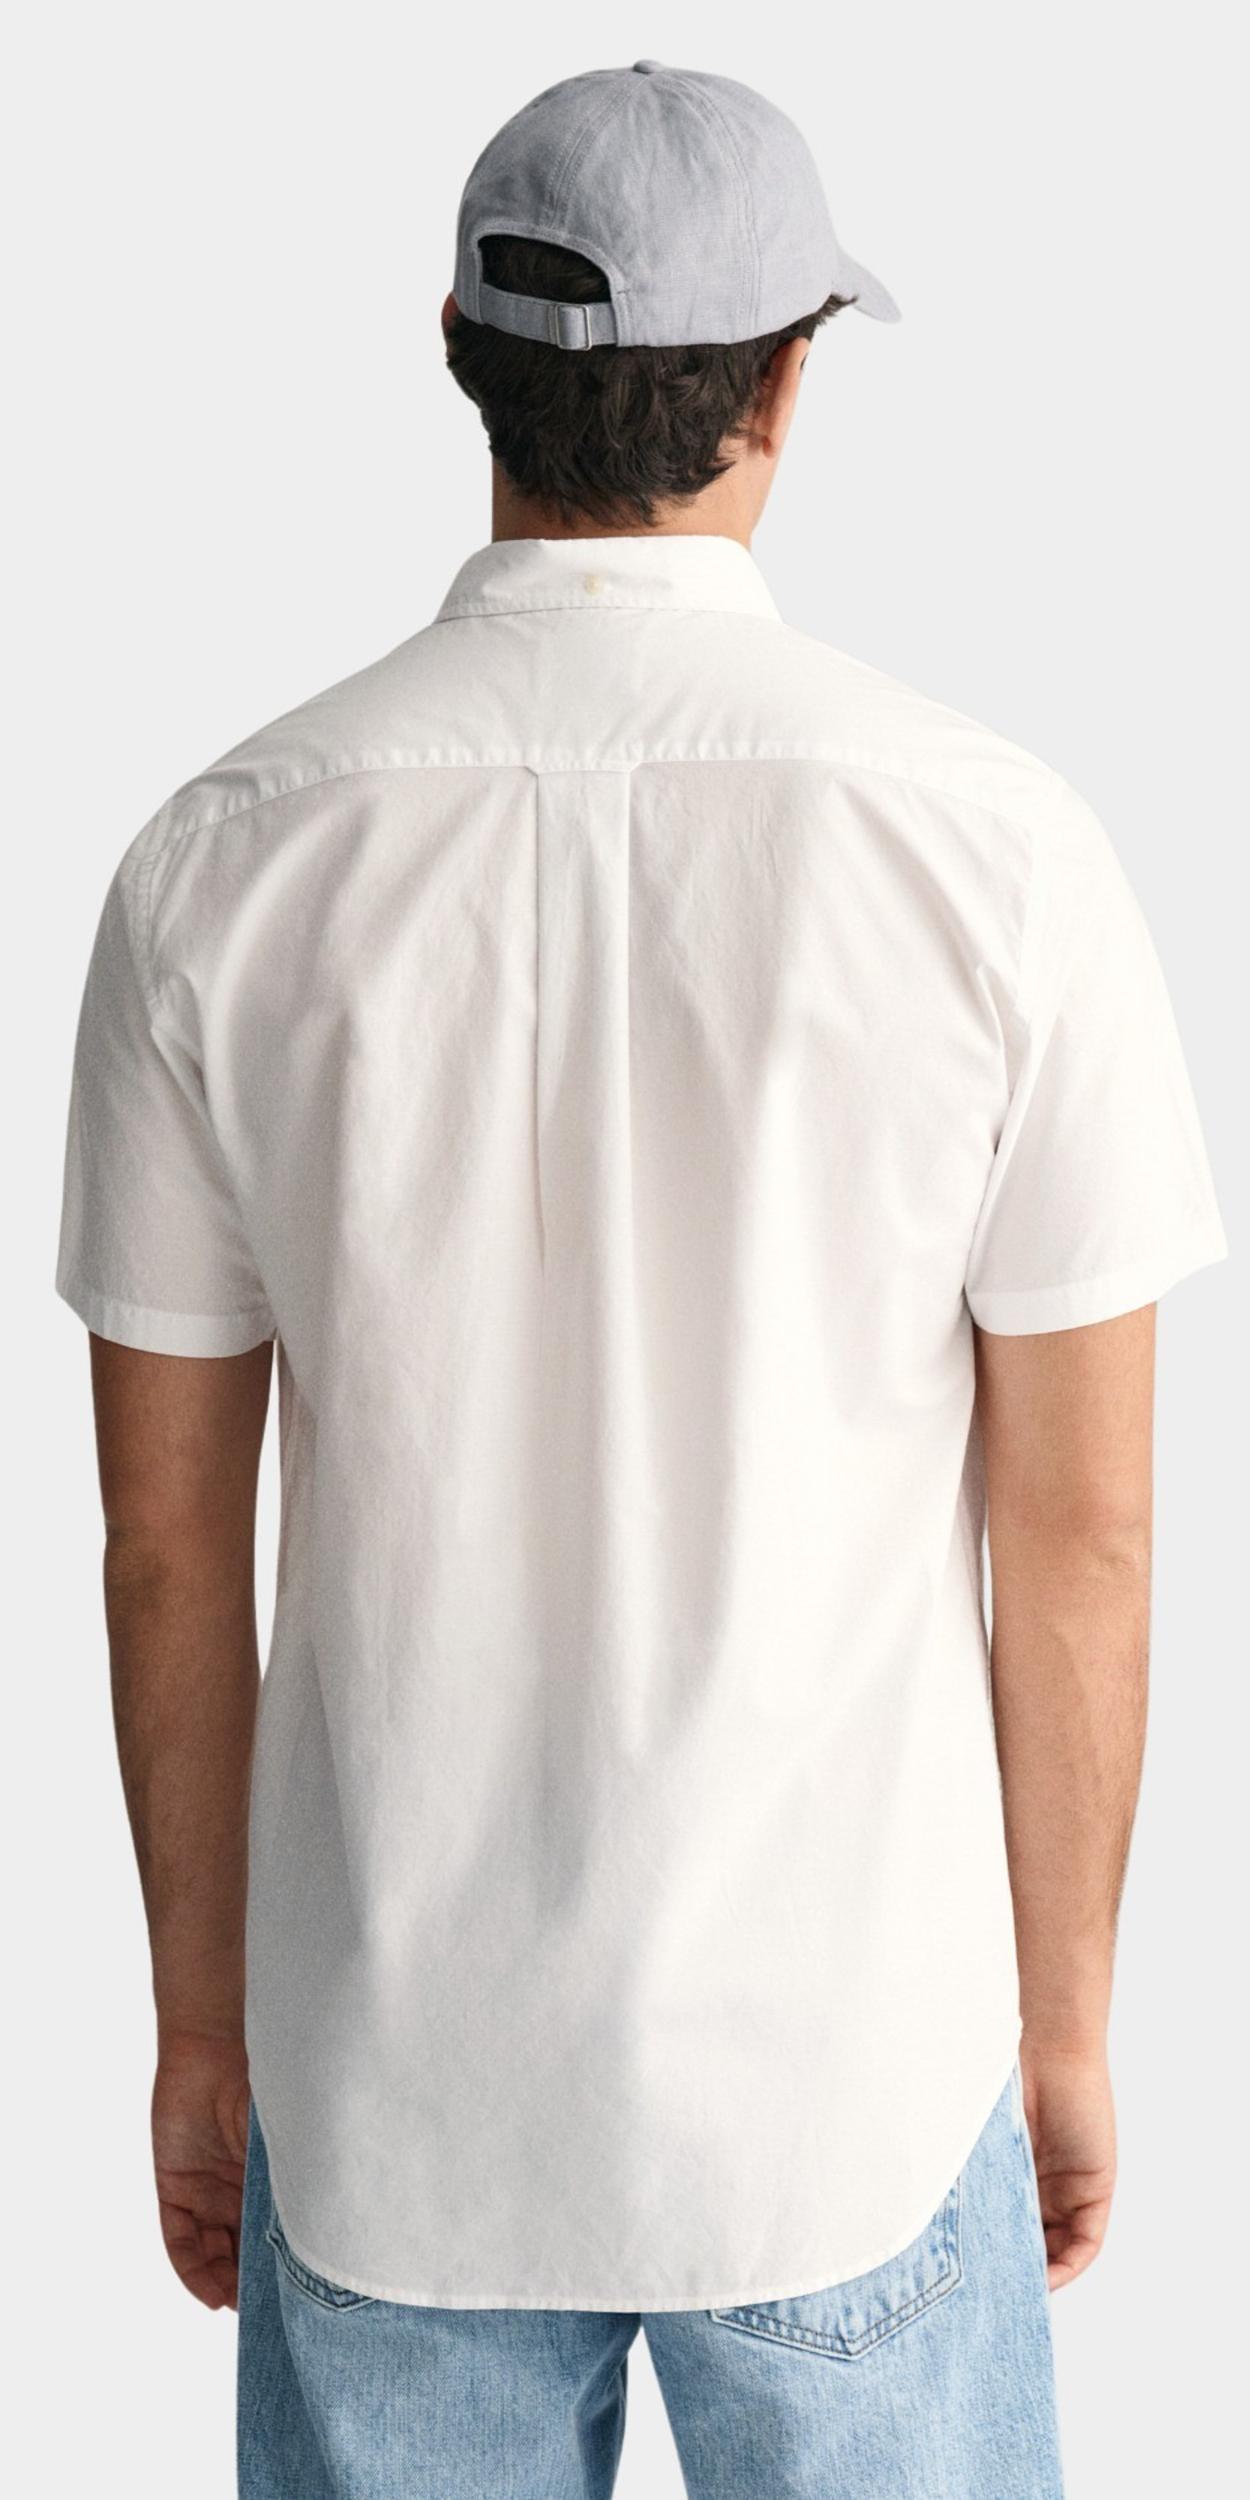 Gant Casual hemd korte mouw Wit Poplin SS Shirt 3000101/110